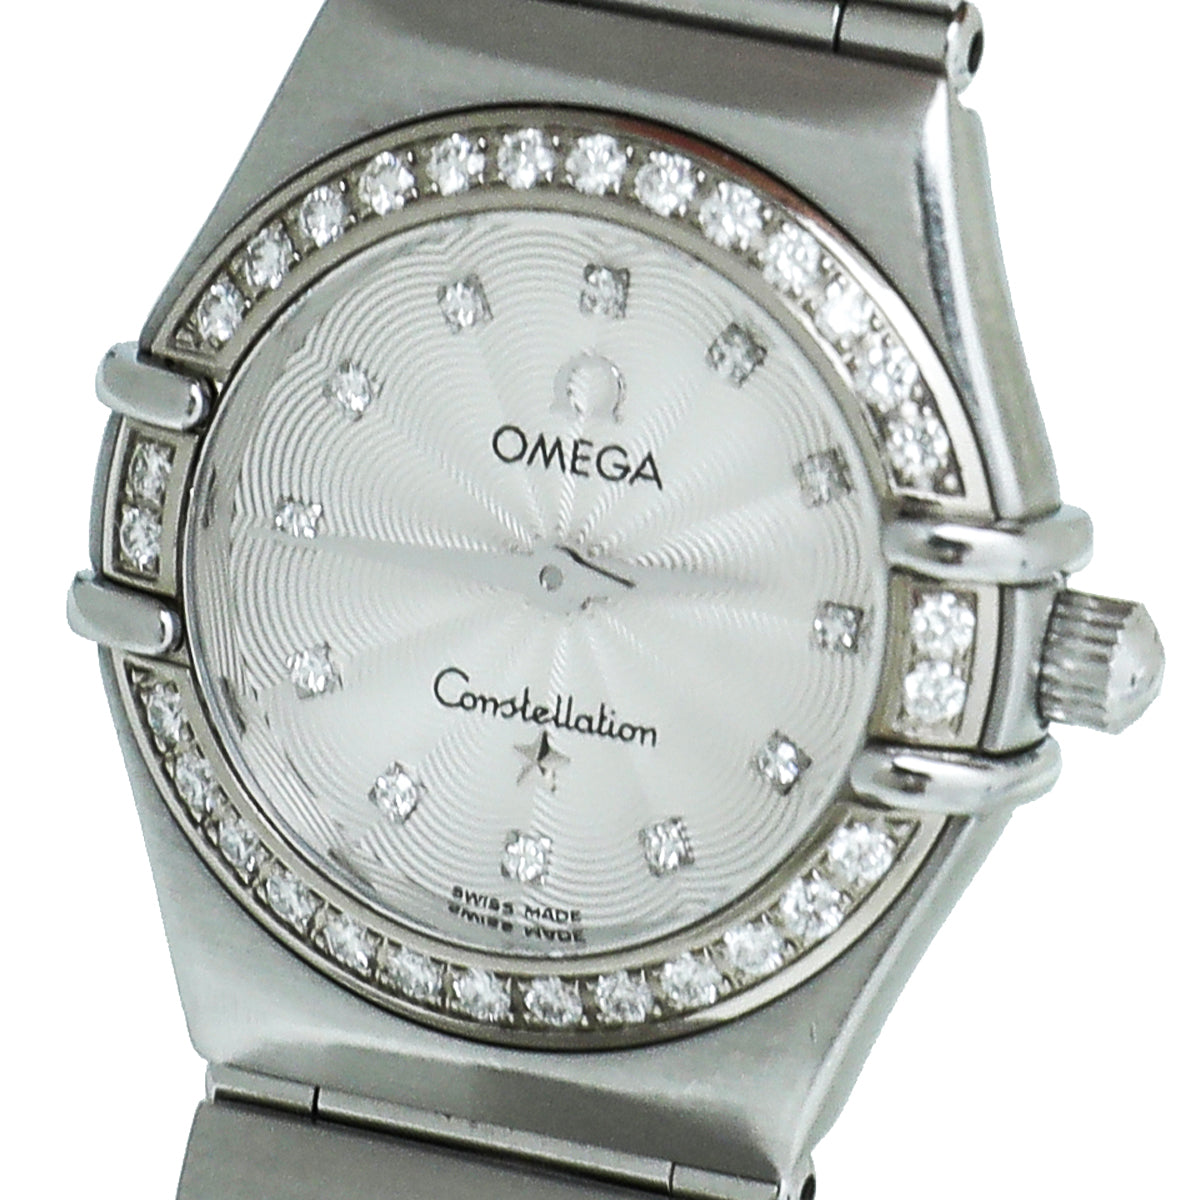 Omega ST.ST Diamond Constellation 24mm Watch